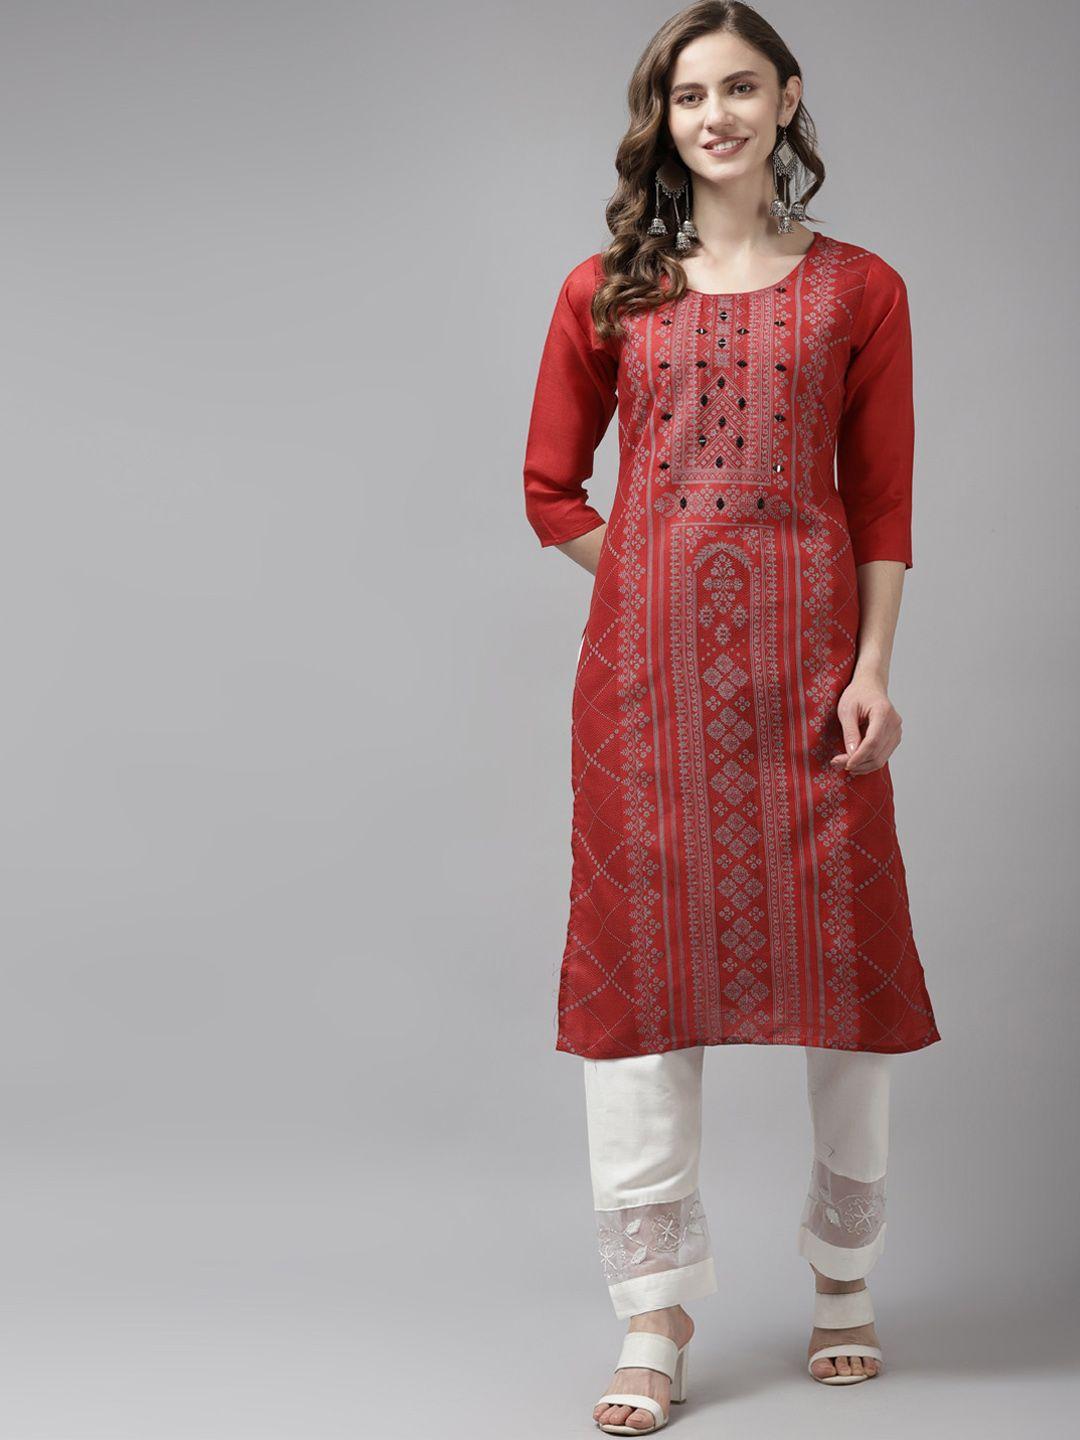 aarika women red ethnic motifs printed thread work kurta